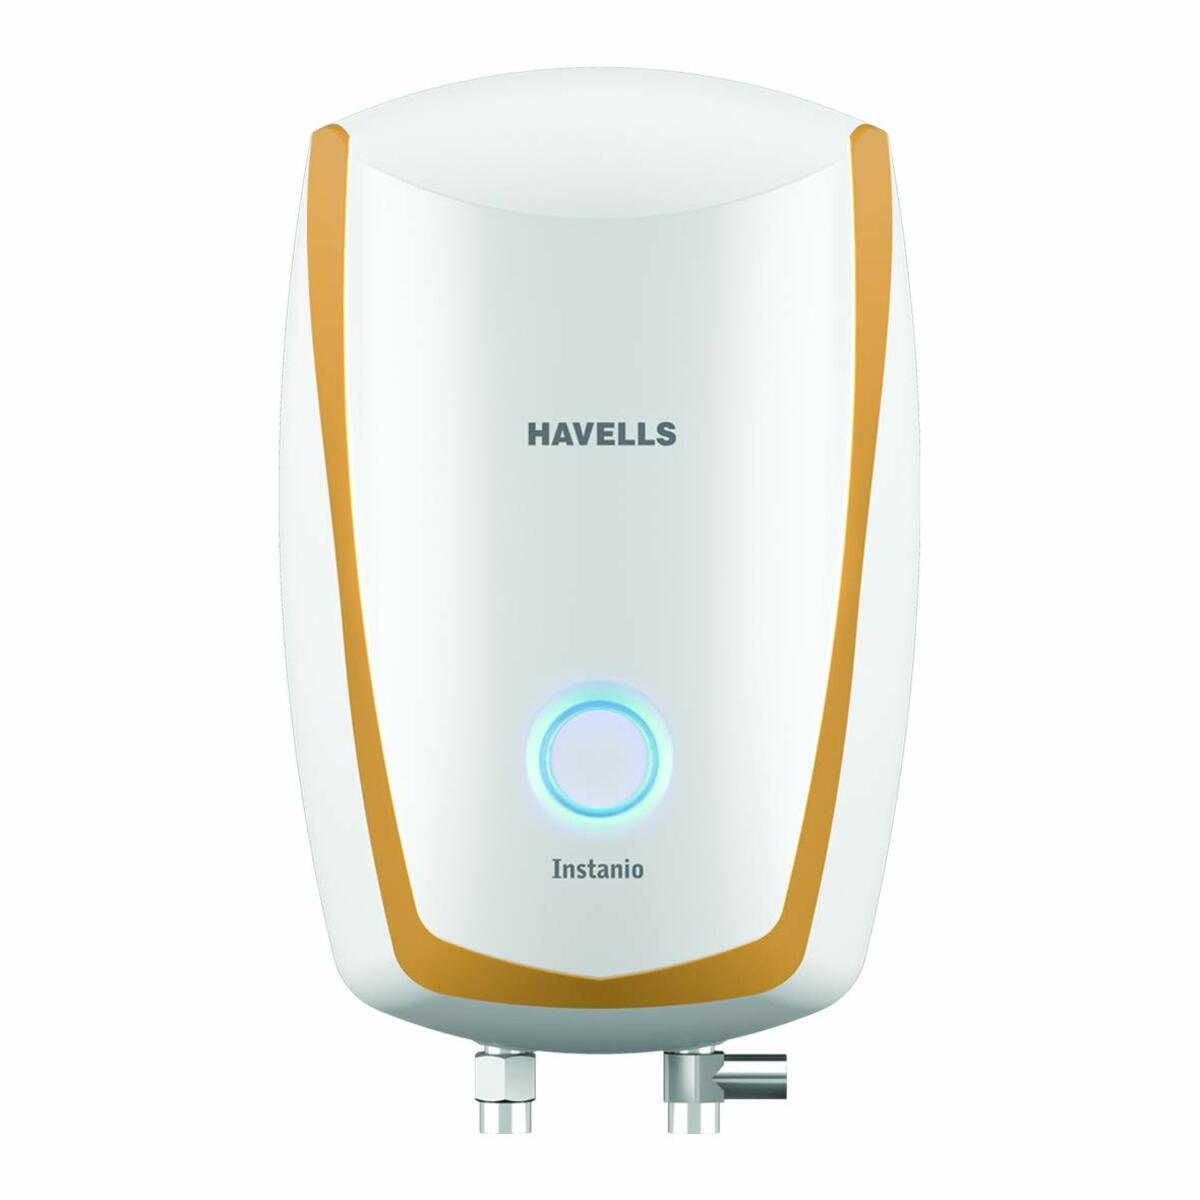 Havells Water Heater Instanio White/Mustard 3Ltr